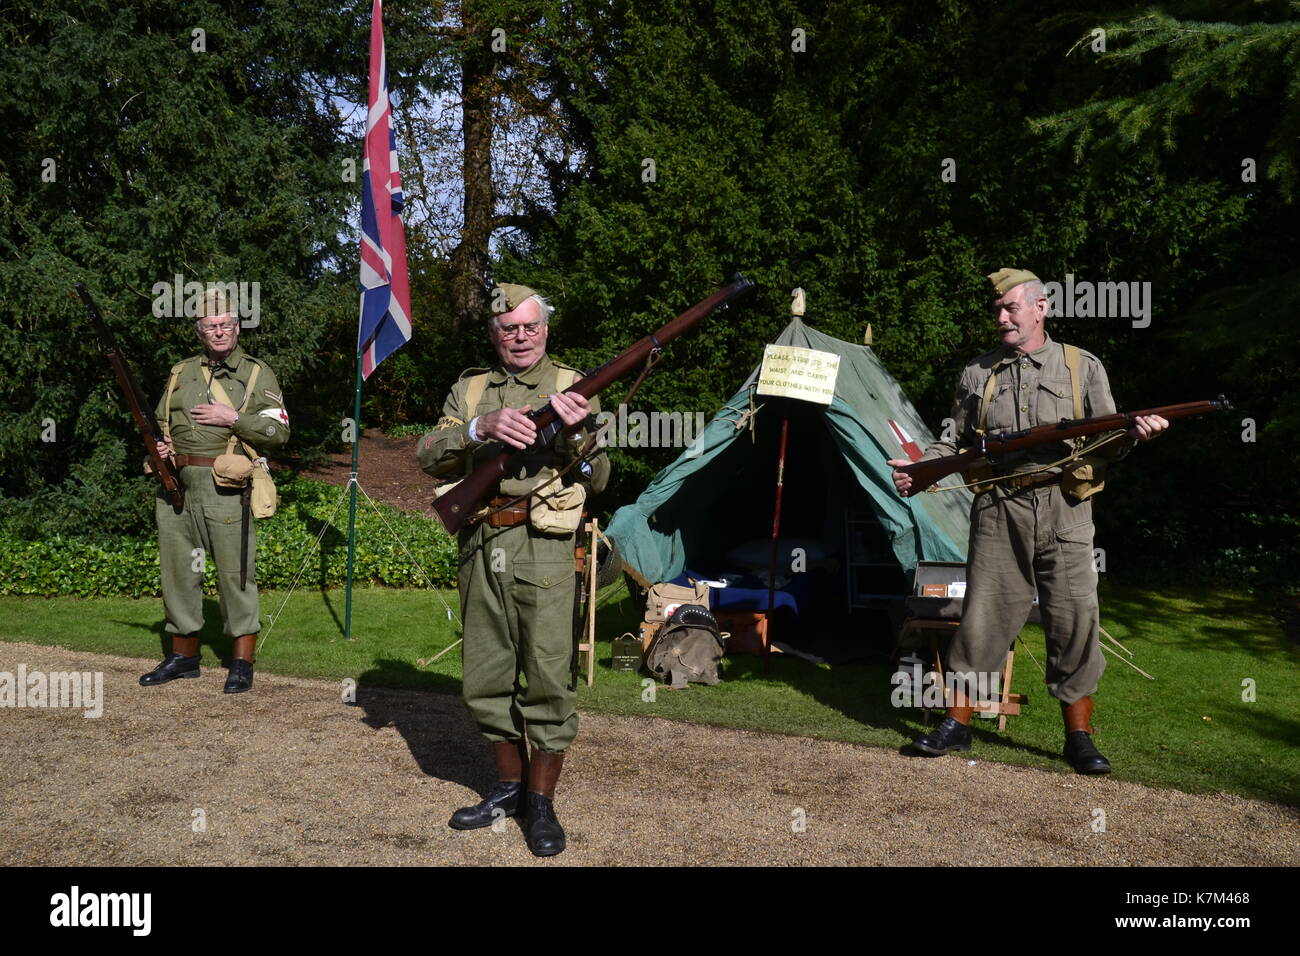 Home front, british soldiers, re-enactors, 1940s event, uk Stock Photo